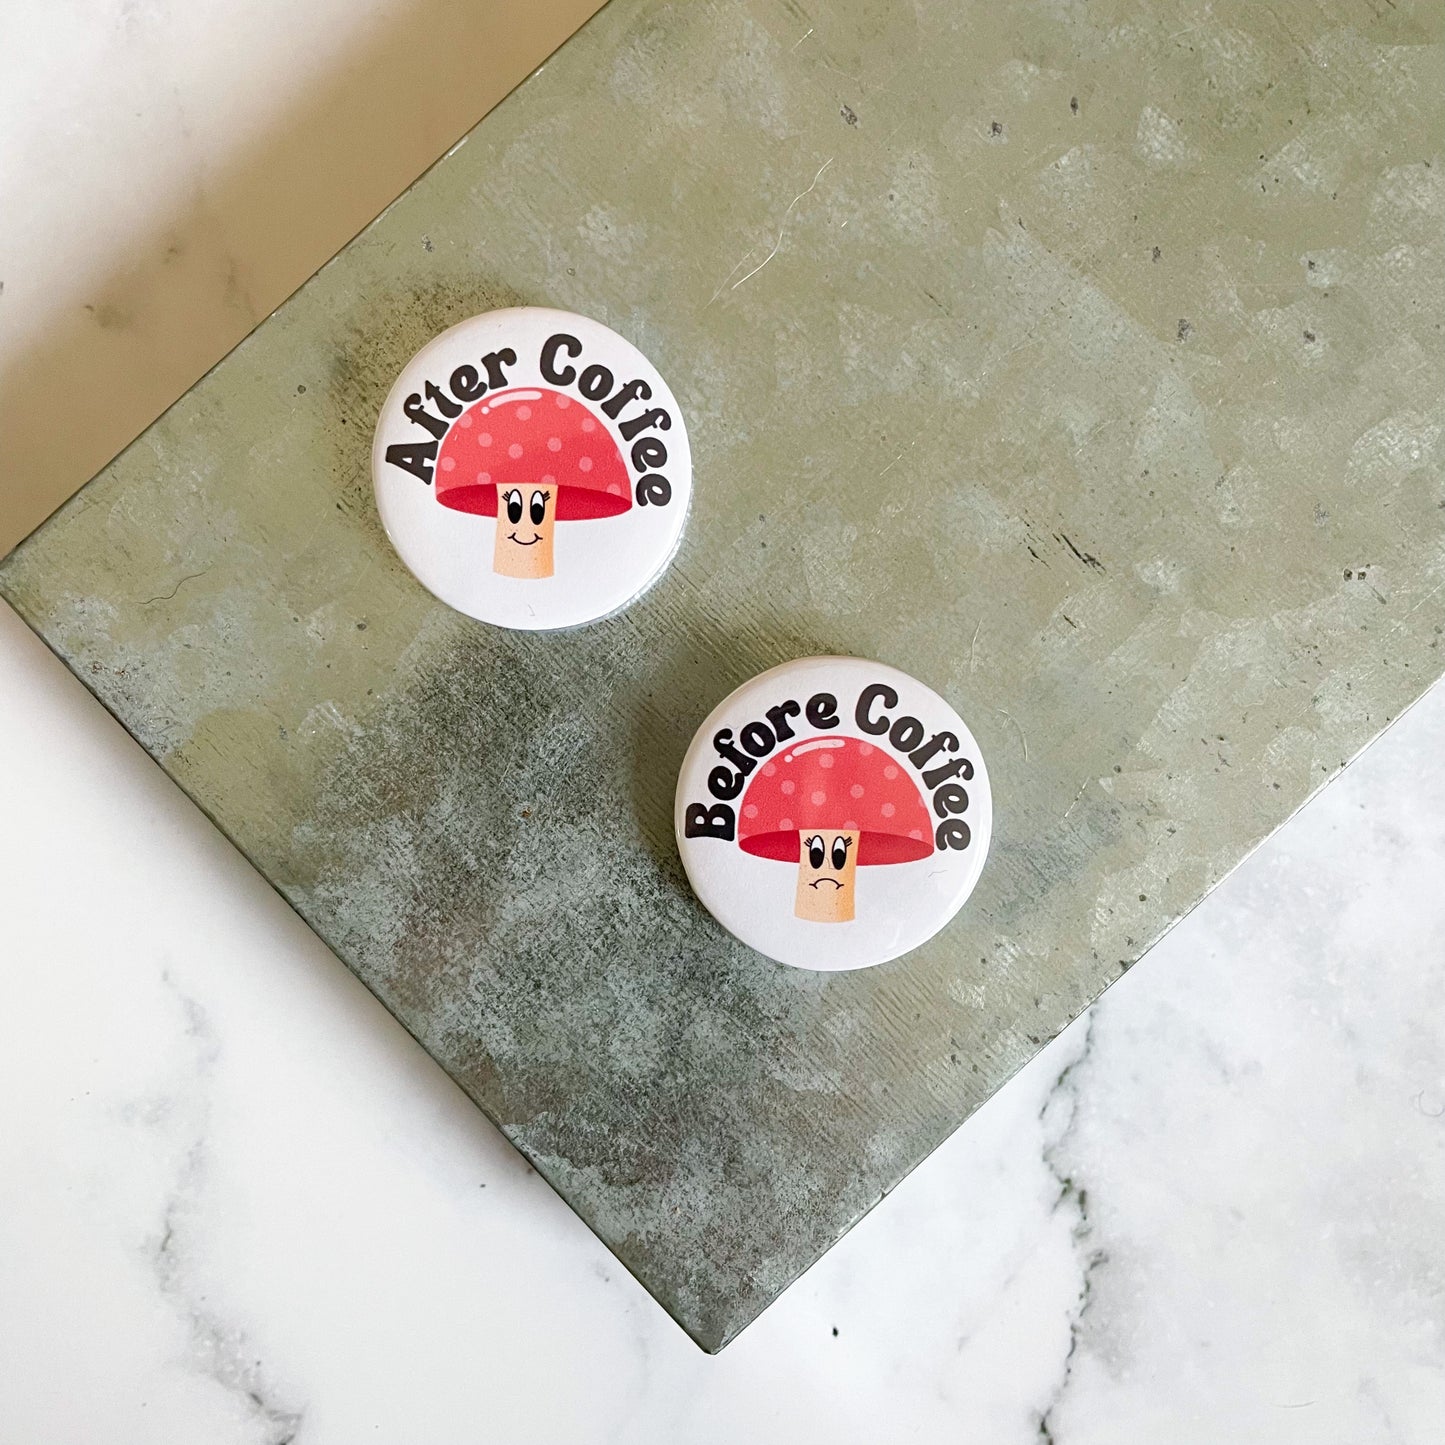 Before Coffee Sad Mushroom Button / Badge (Buy 4 Get 1 FREE)